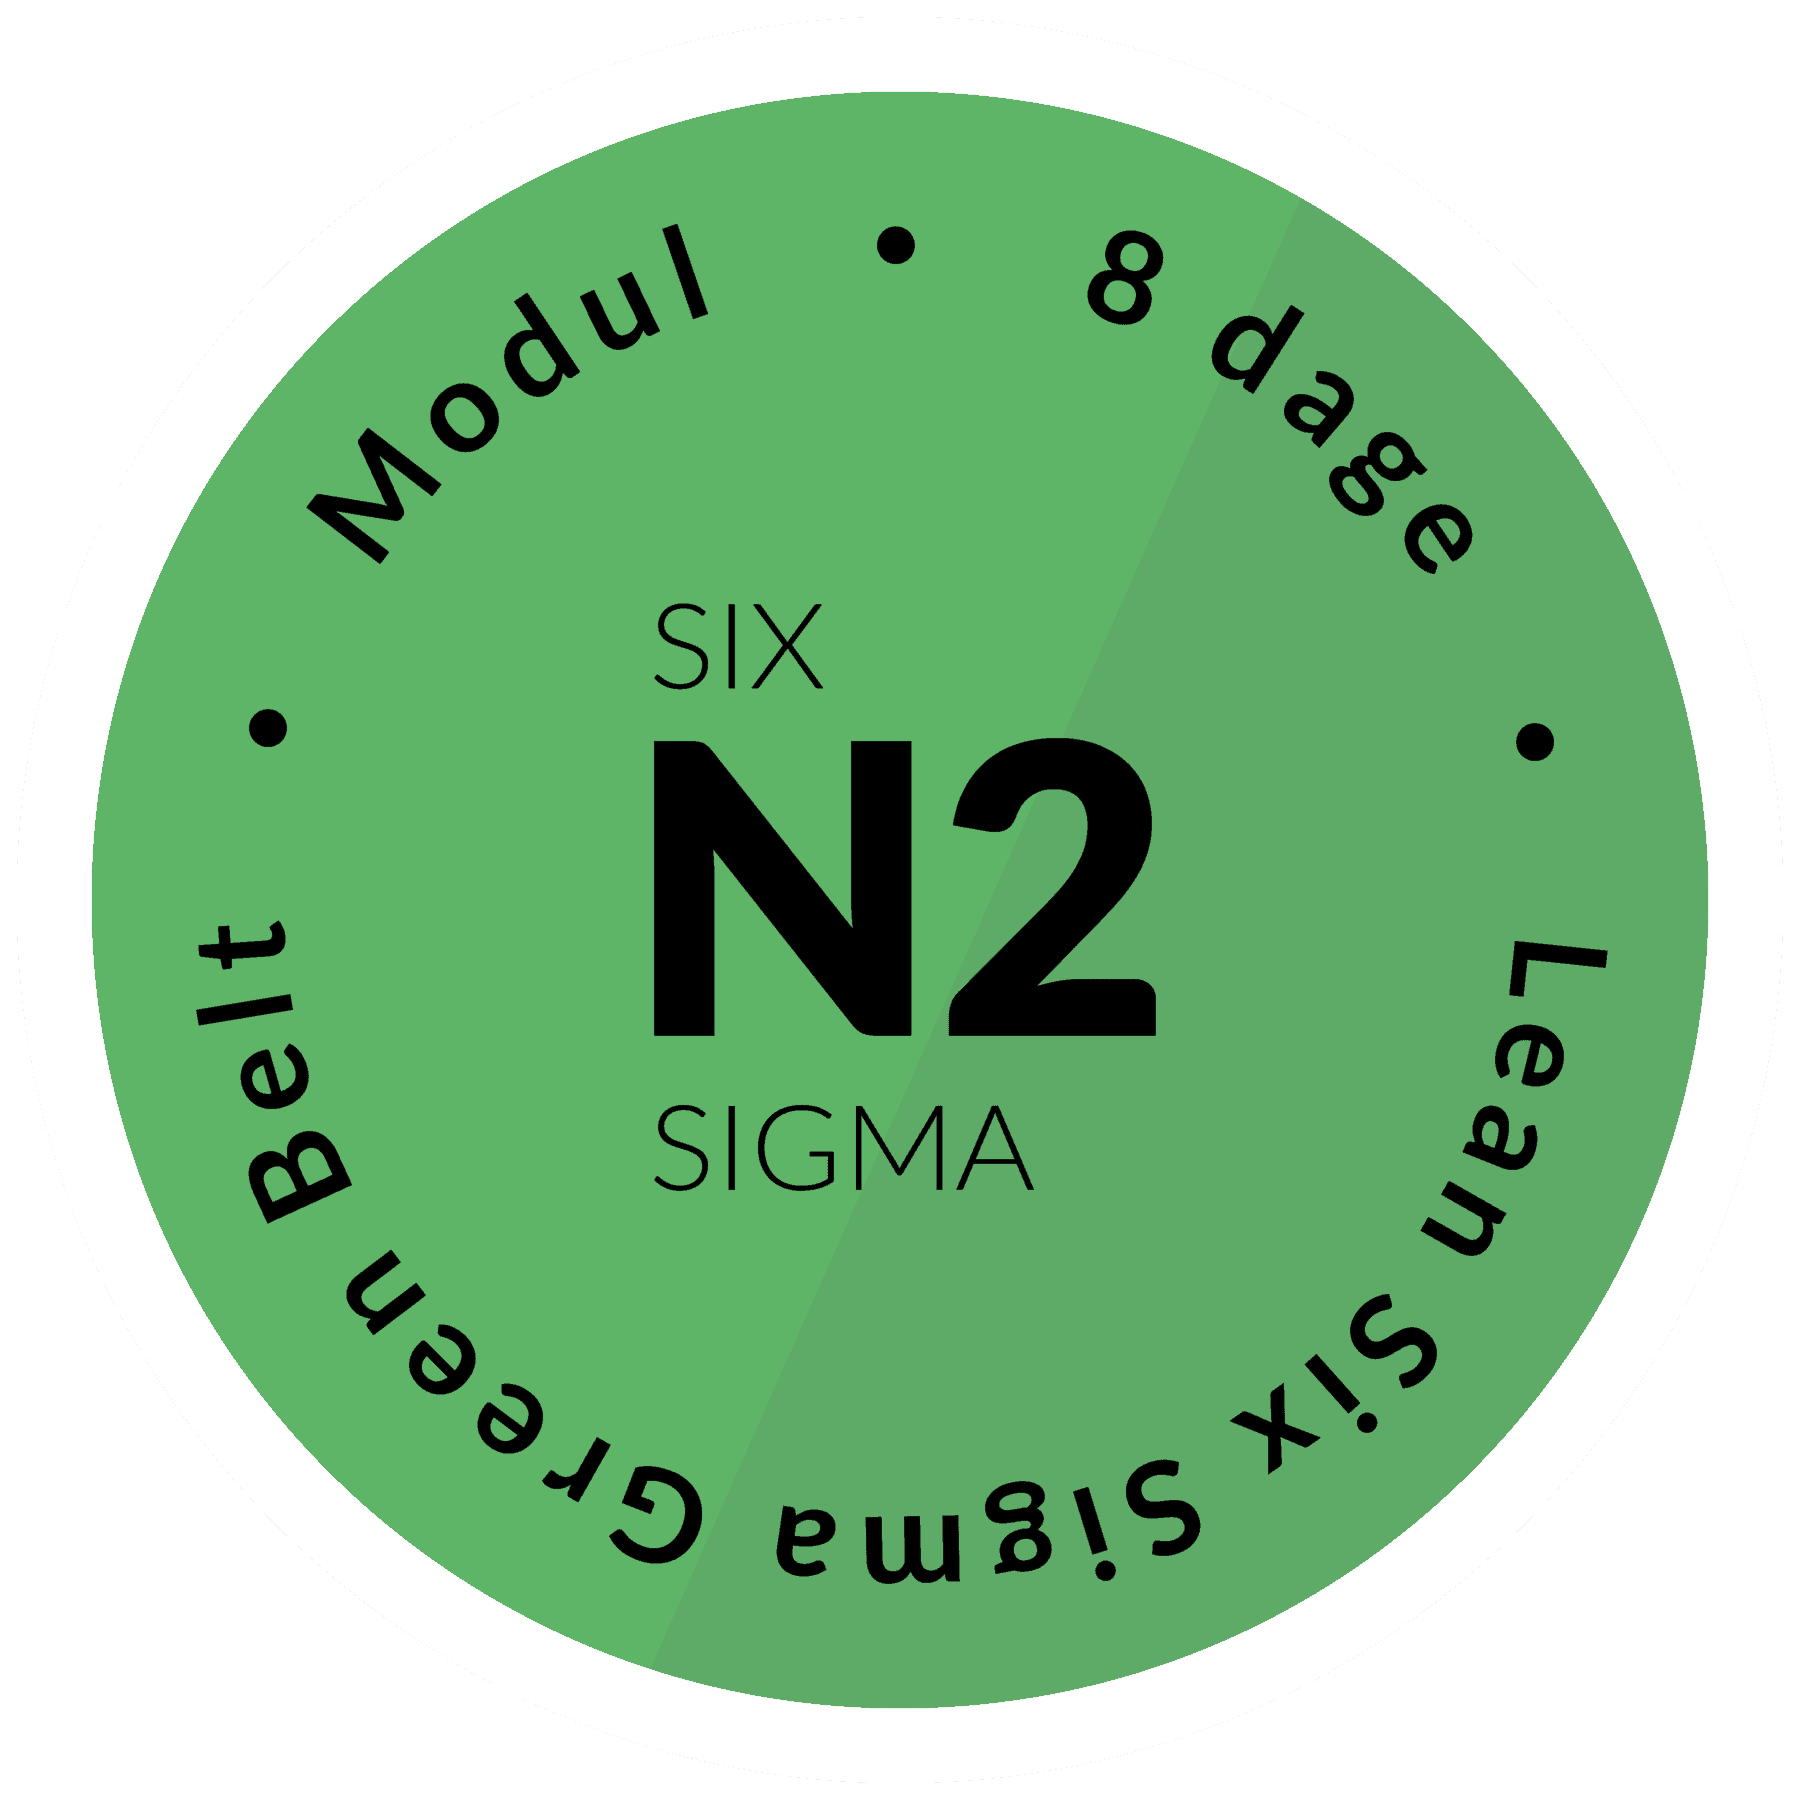 Modul - Lean Six Sigma Green Belt